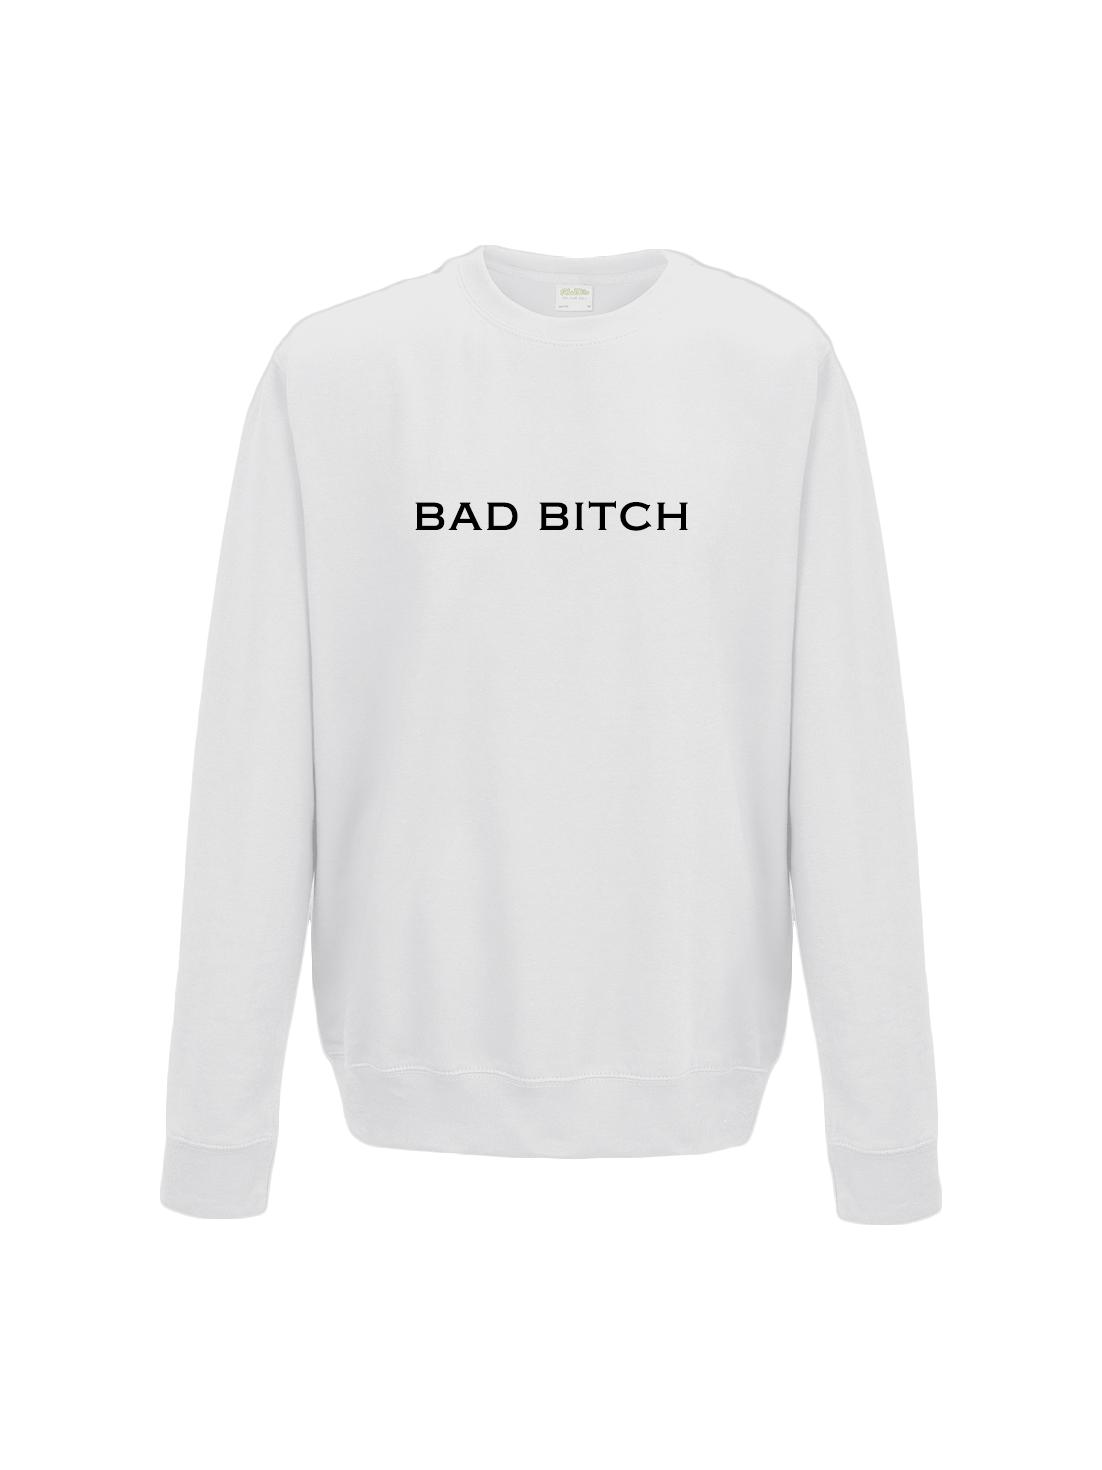 BAD BITCH sweatshirt